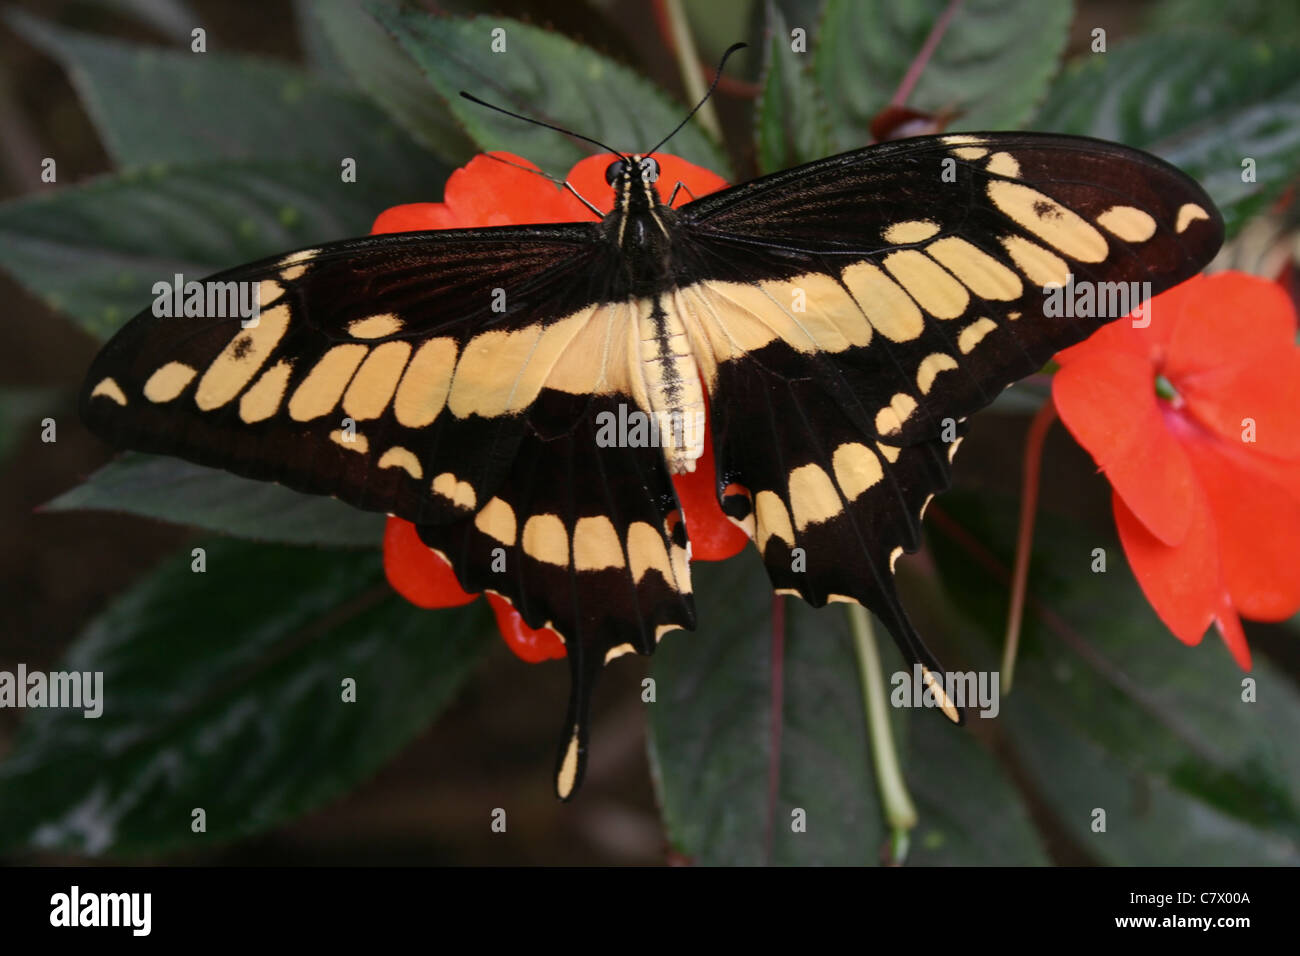 König Schwalbenschwanz oder Thoas Schwalbenschwanz Schmetterling. Benalmadena Schmetterlingspark, Benalmadena Pueblo, Málaga, Costa Del Sol, Spanien. Stockfoto